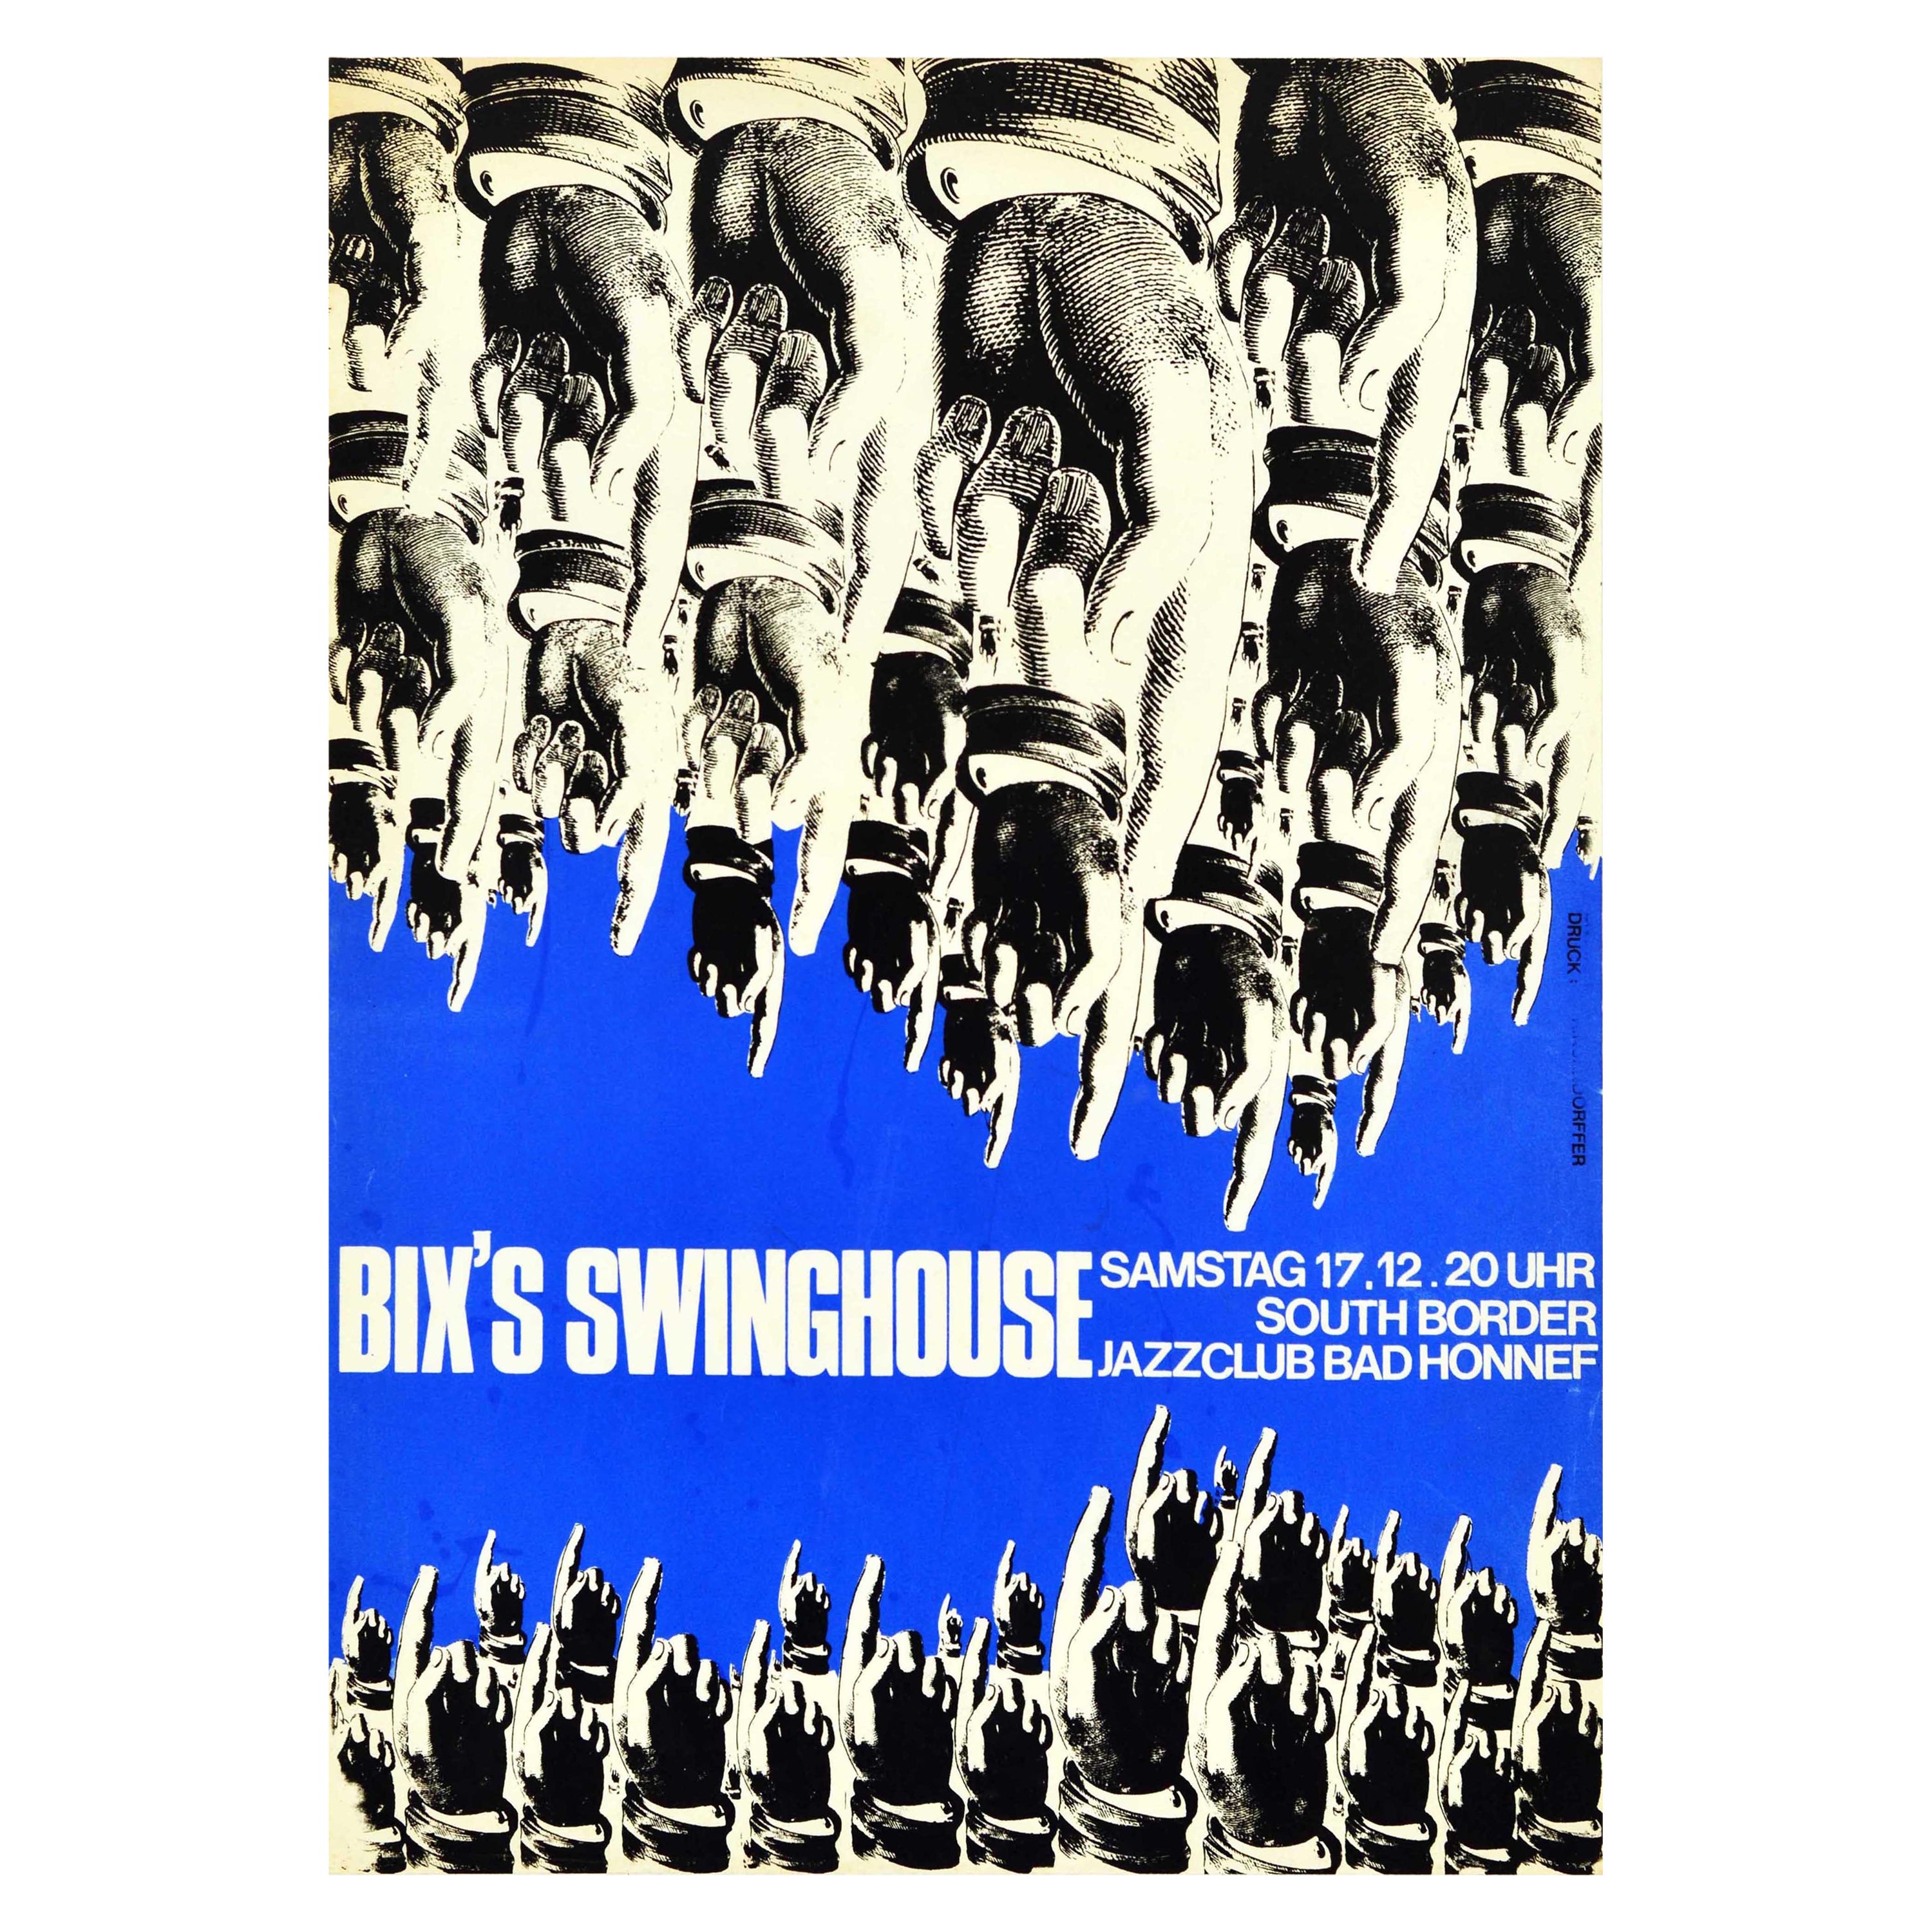 Original Vintage Music Poster Bix's Swinghouse South Border Jazz Club Bad Honnef For Sale